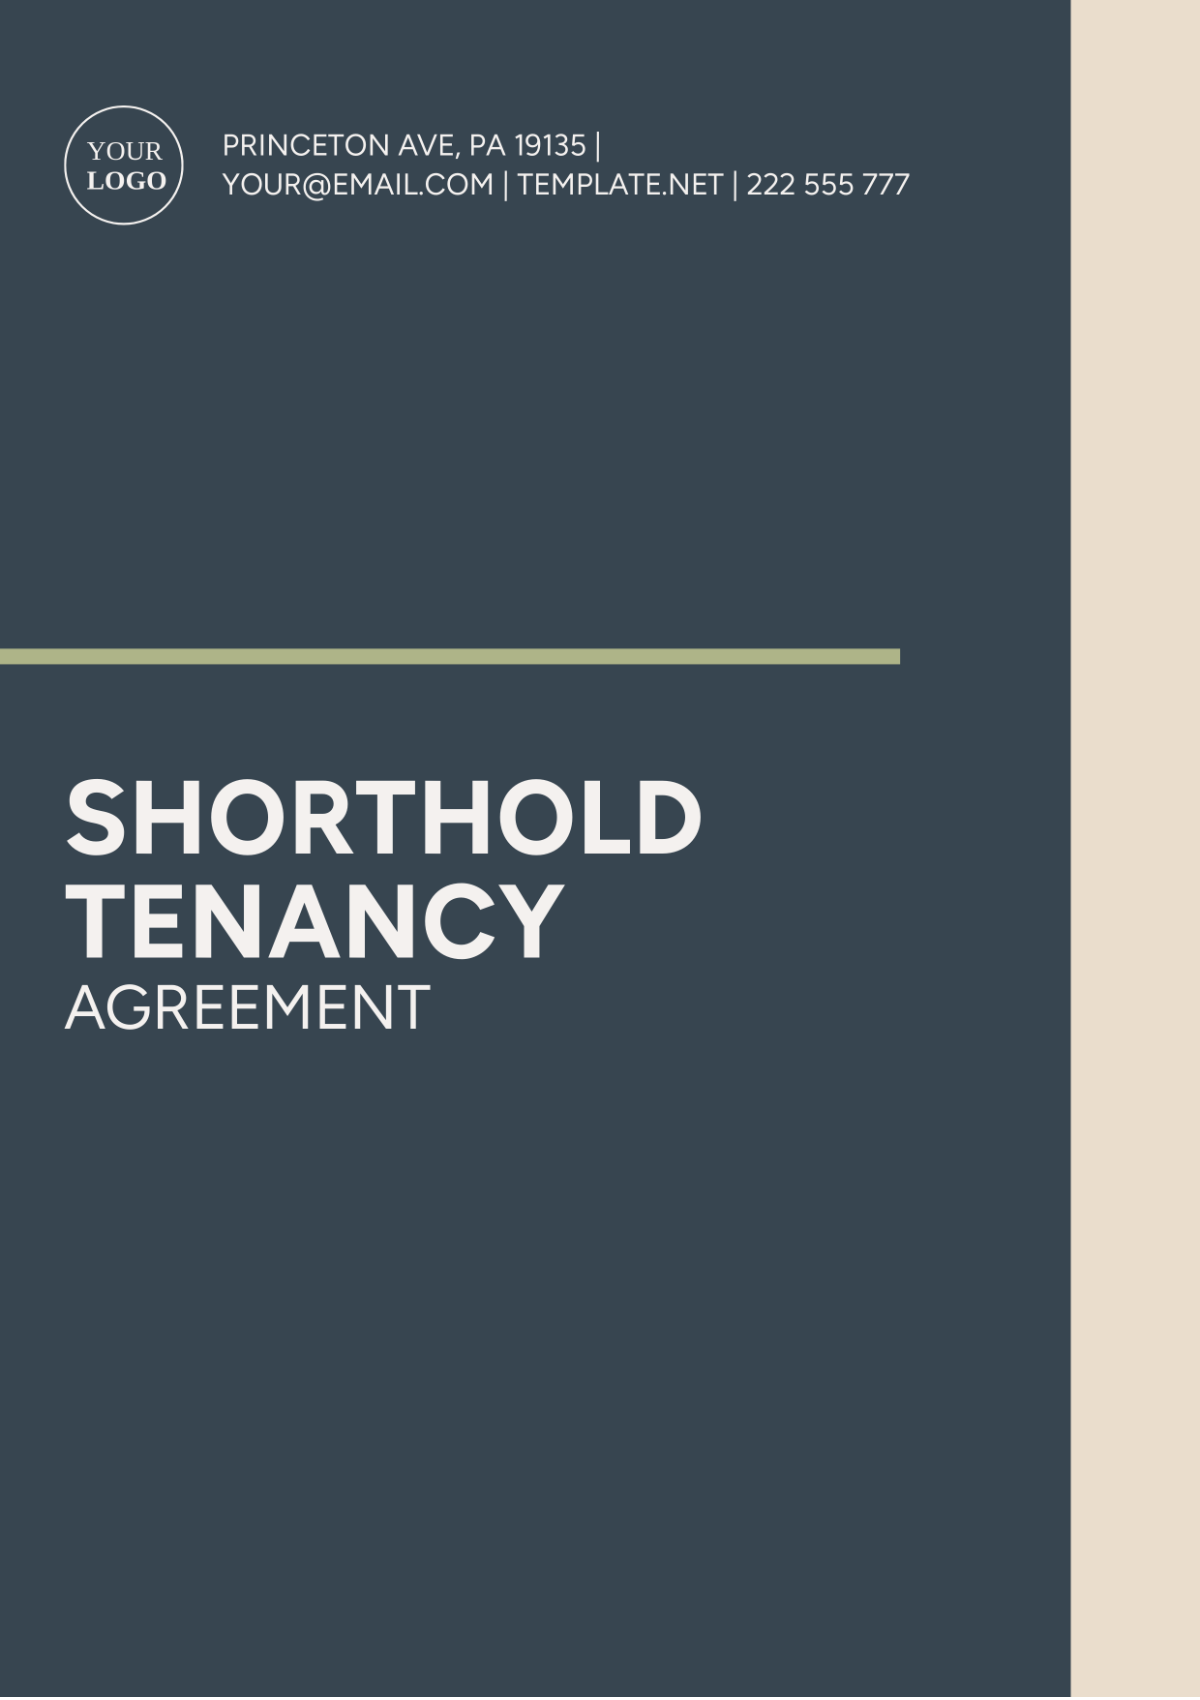 Shorthold Tenancy Agreement Template